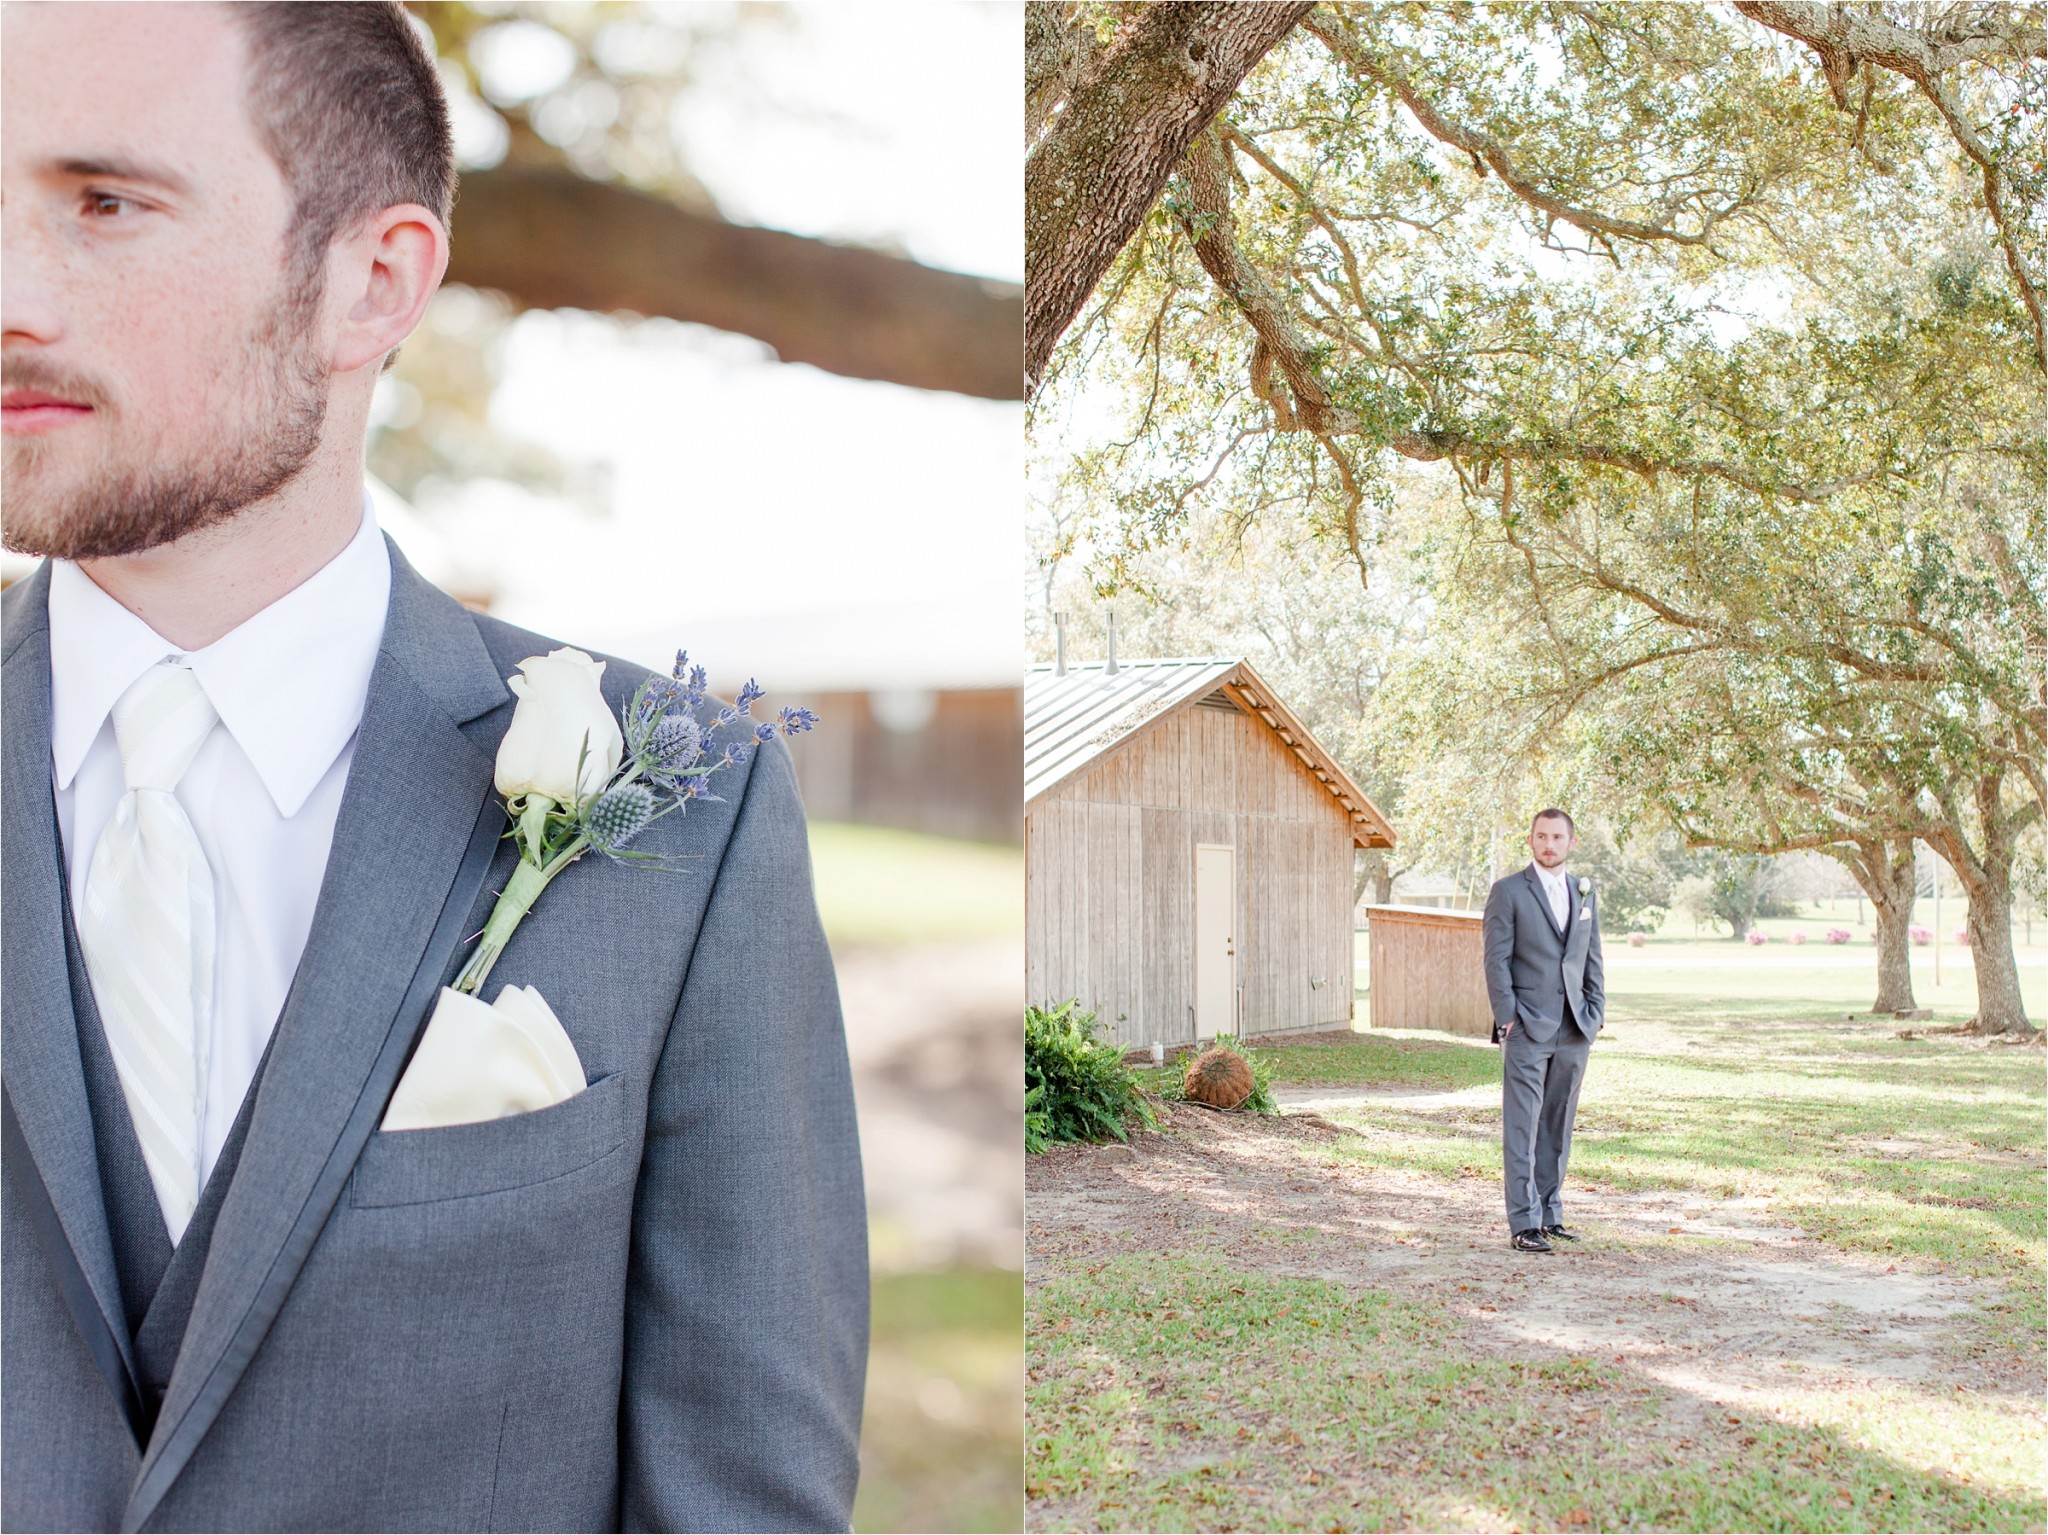 the groom at his Oak Hollow Farm Wedding